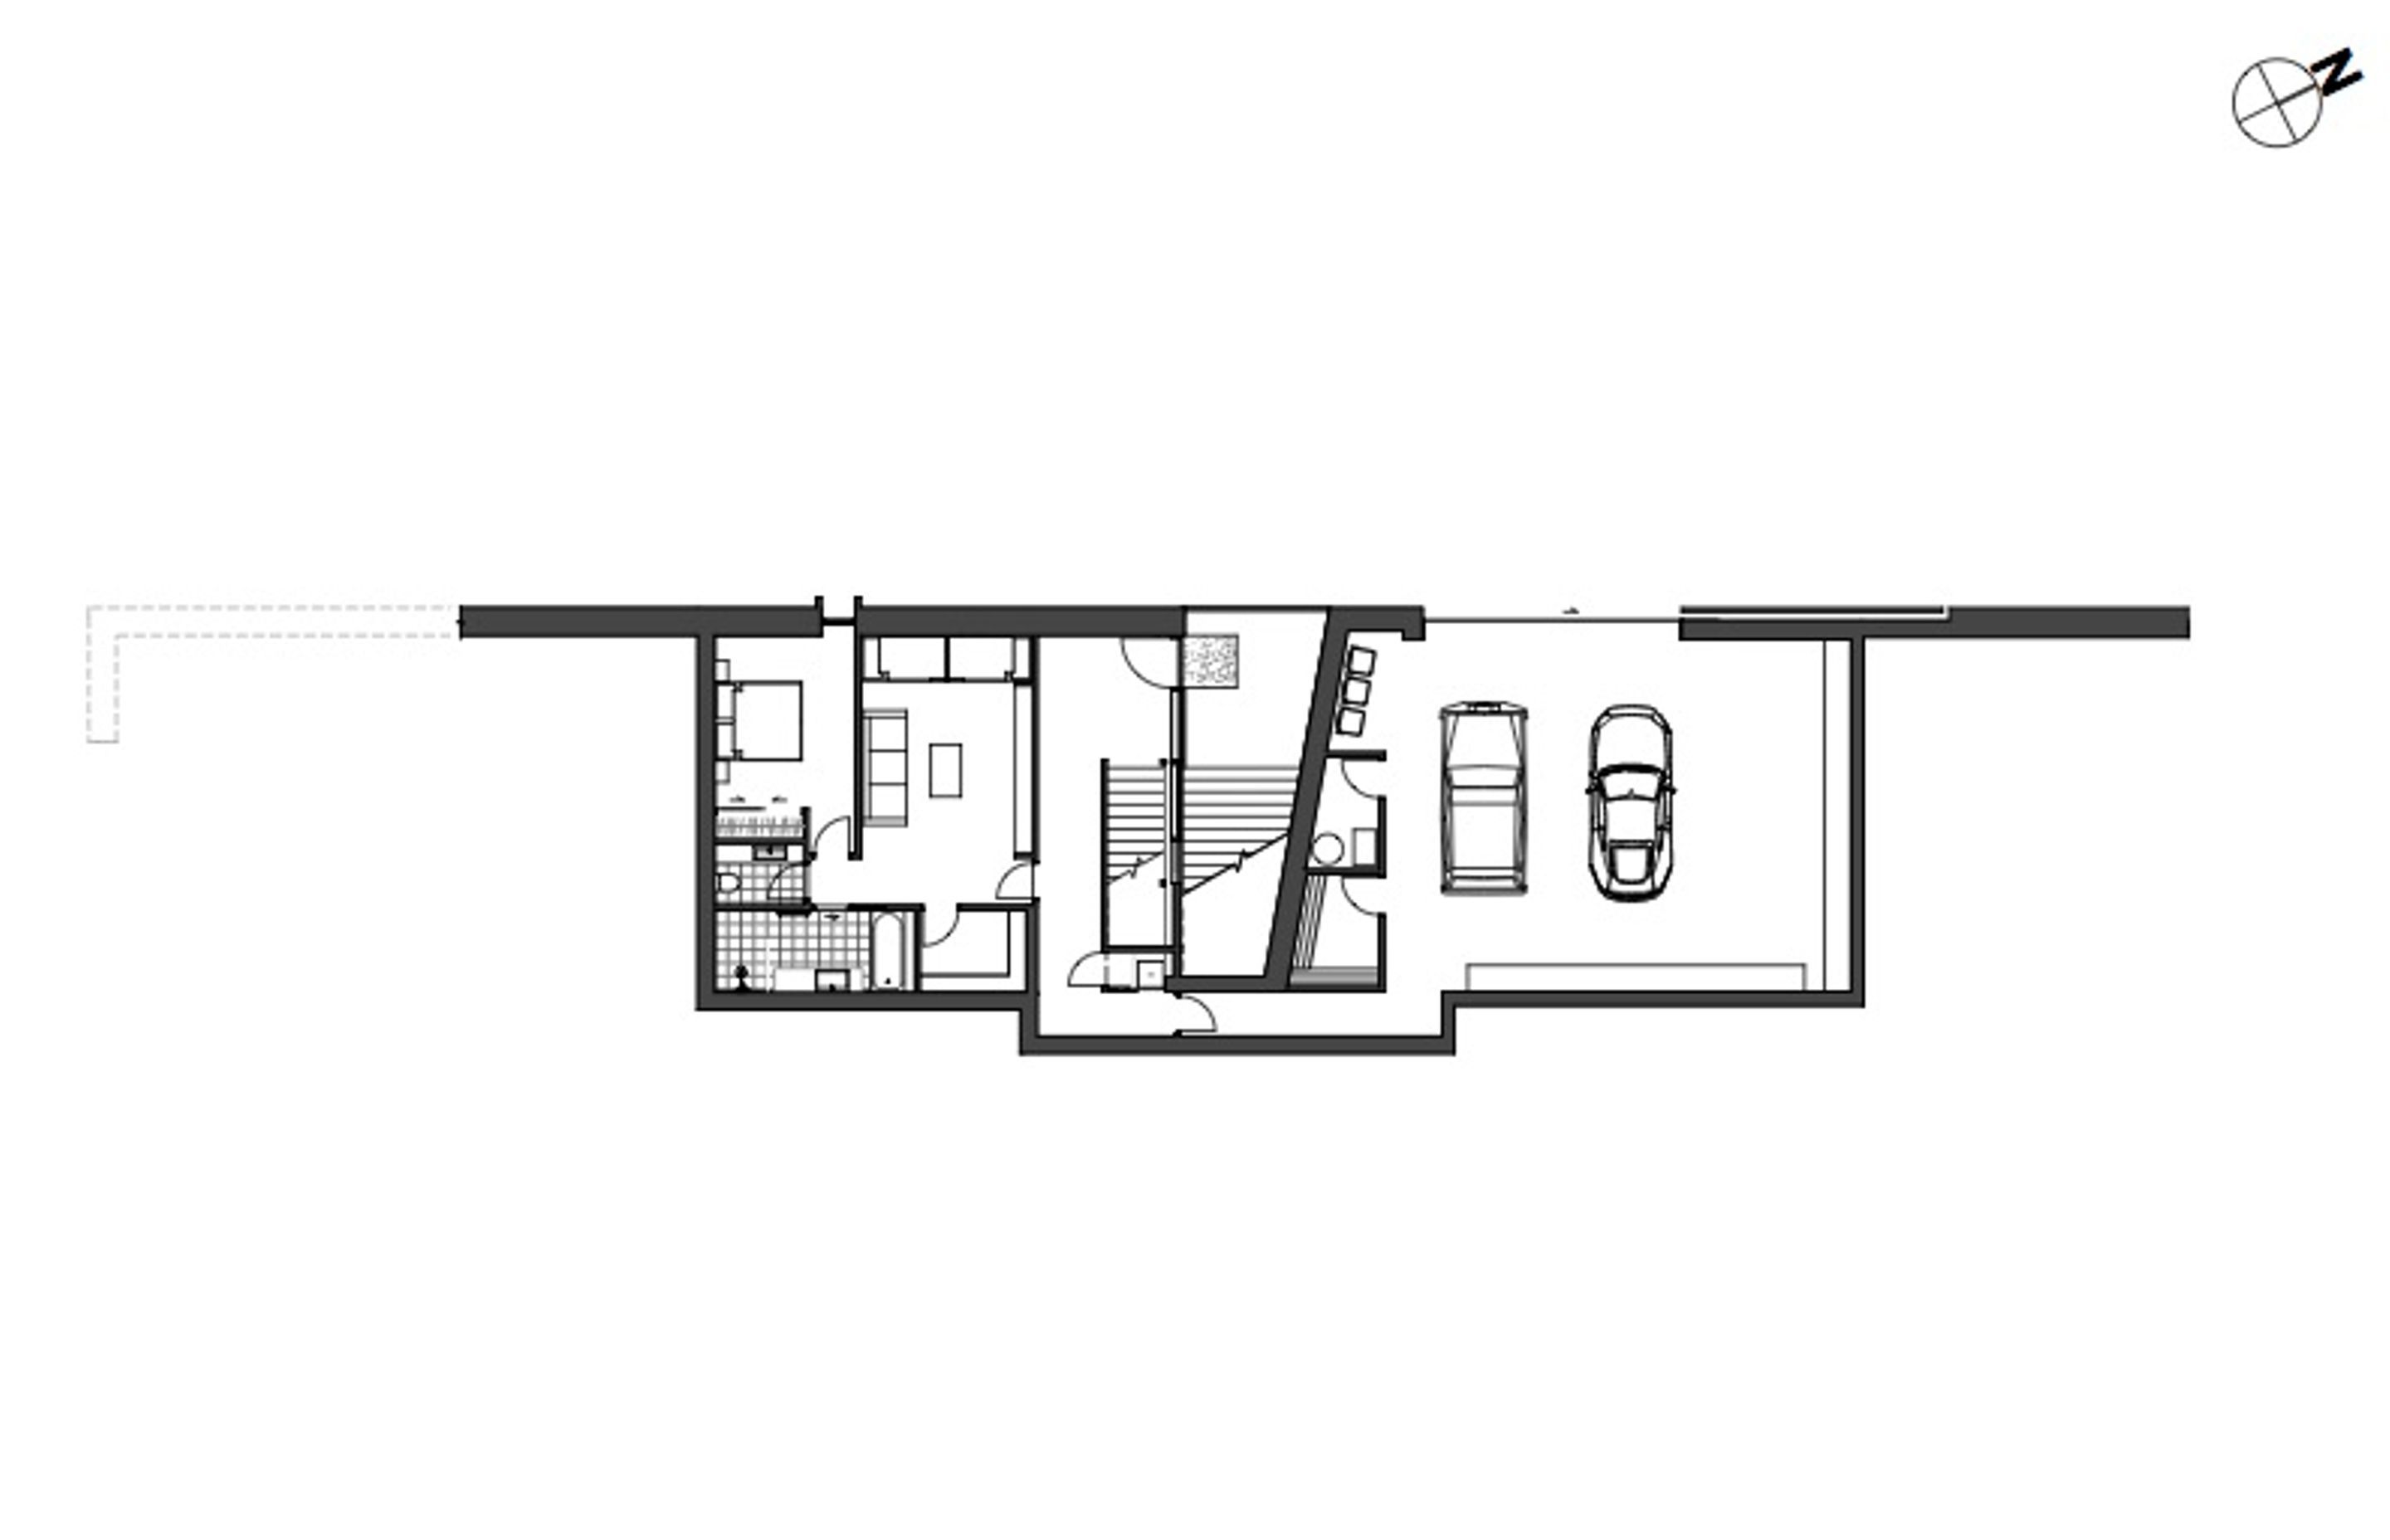 Ground-floor plan by Team Green Architects.